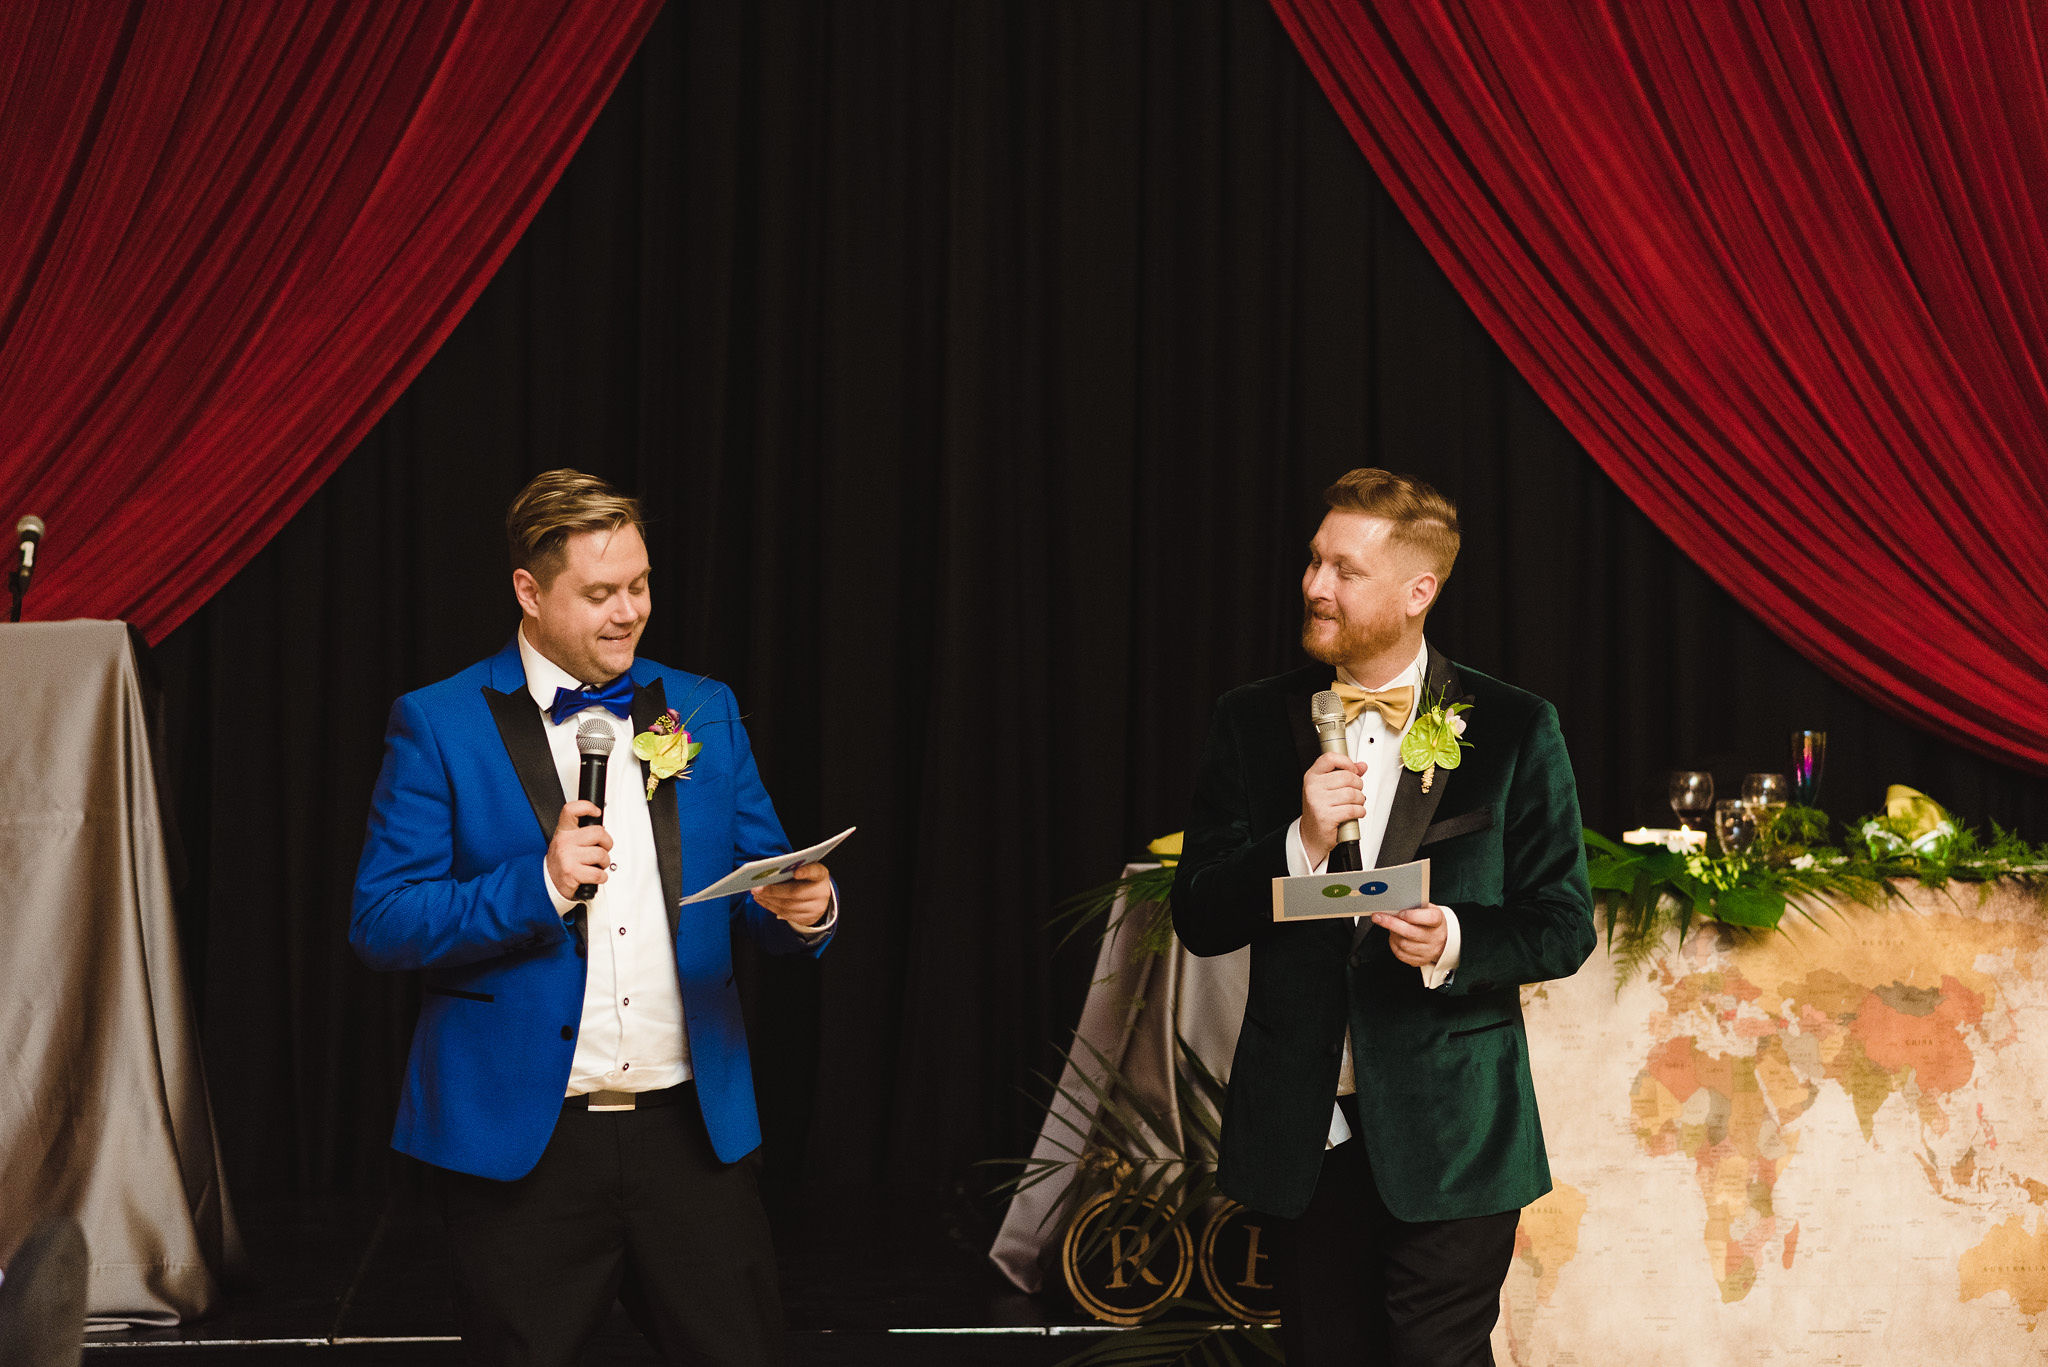 grooms reading their wedding speeches into their microphones during a fun wedding reception at the Hilton Fallsview in Niagara Falls